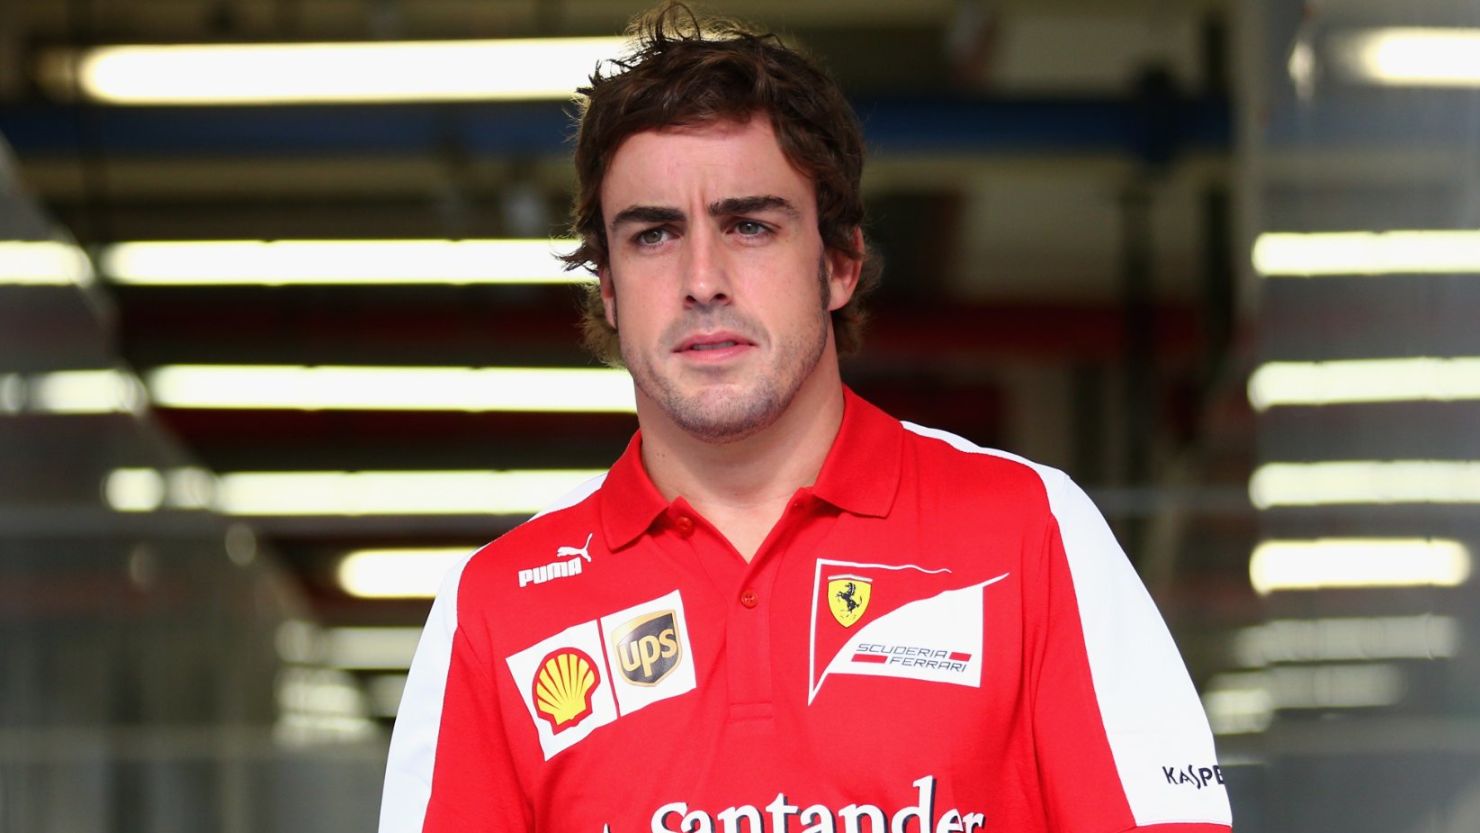 Ferrari's two-time world champion Fernando Alonso drove for McLaren during the 2007 season.